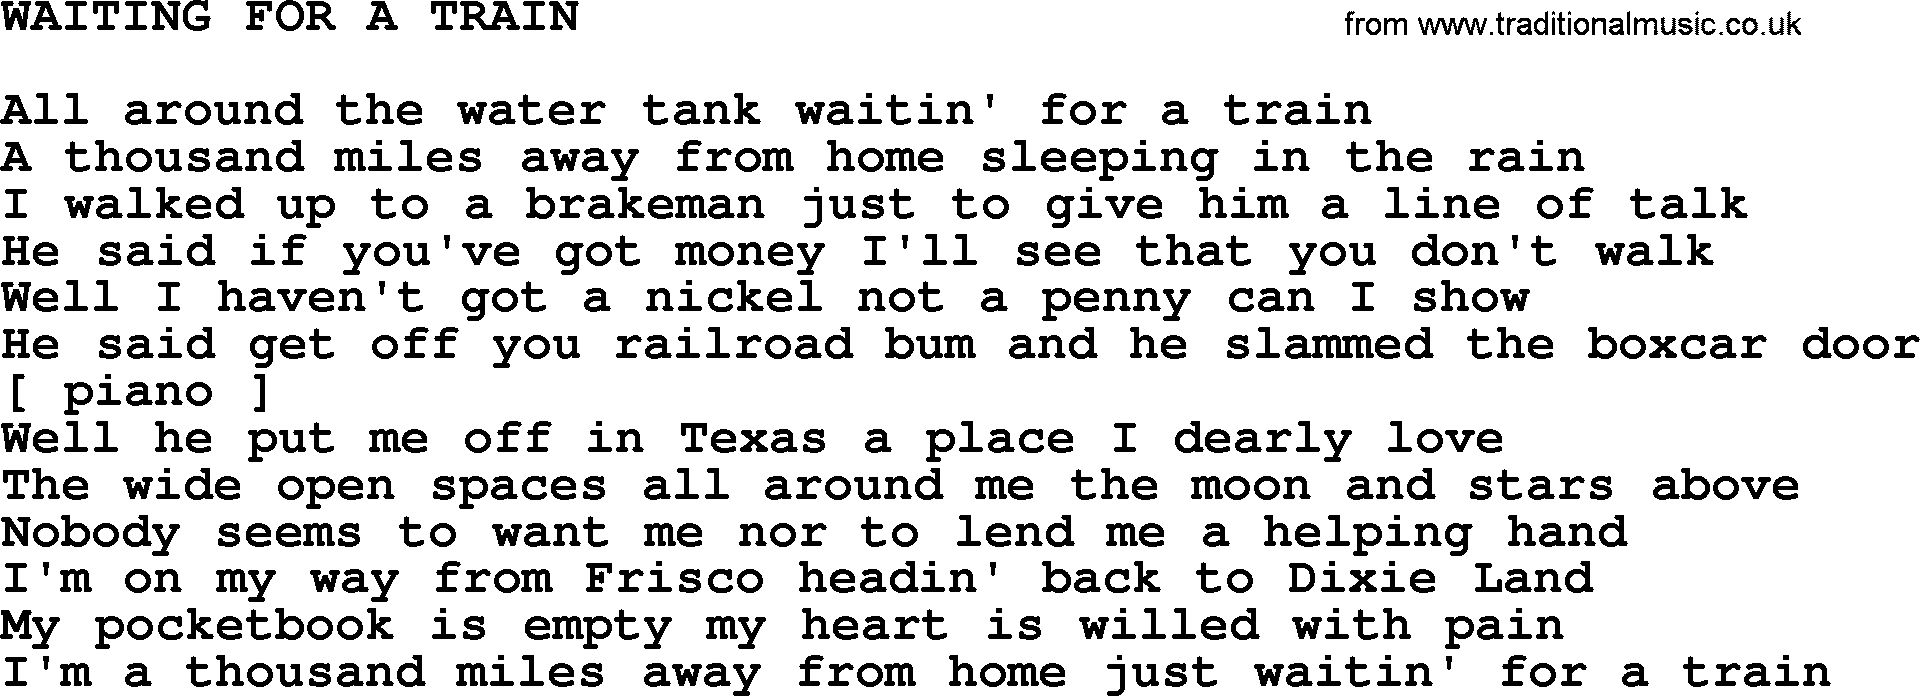 Johnny Cash song Waiting For A Train.txt lyrics